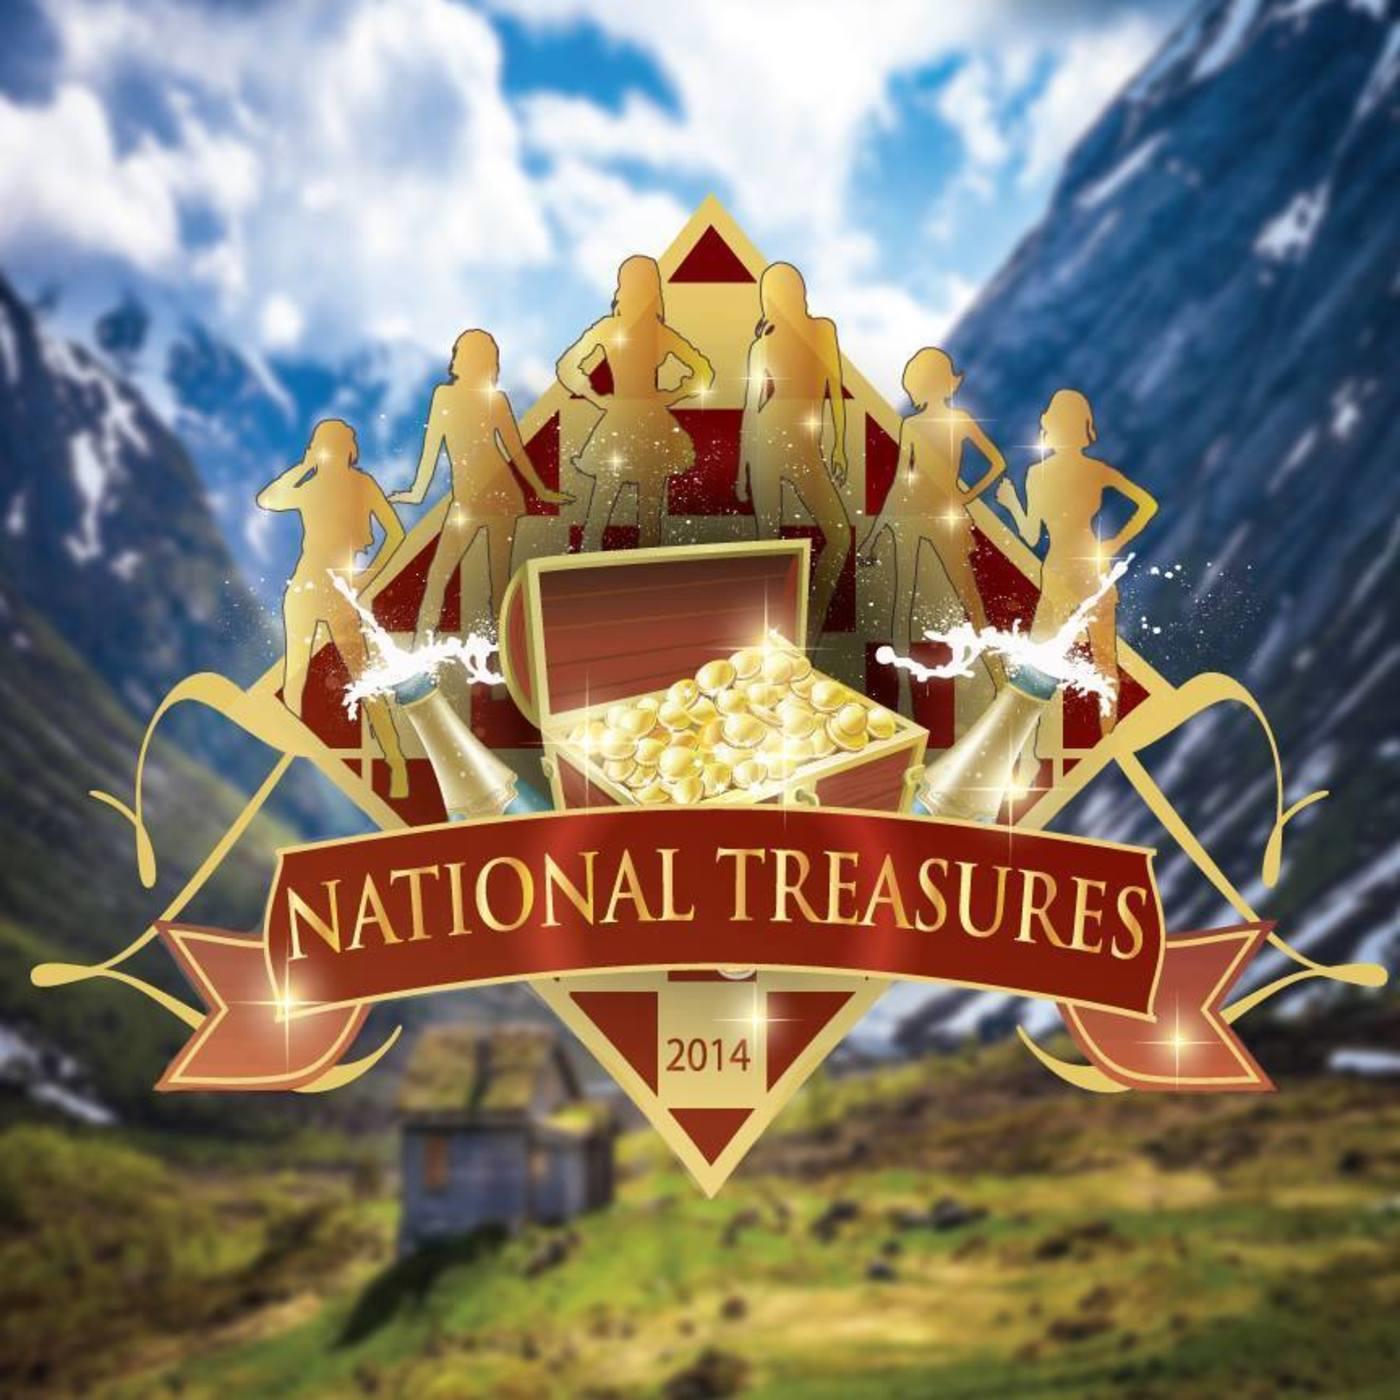 National Treasures 2014